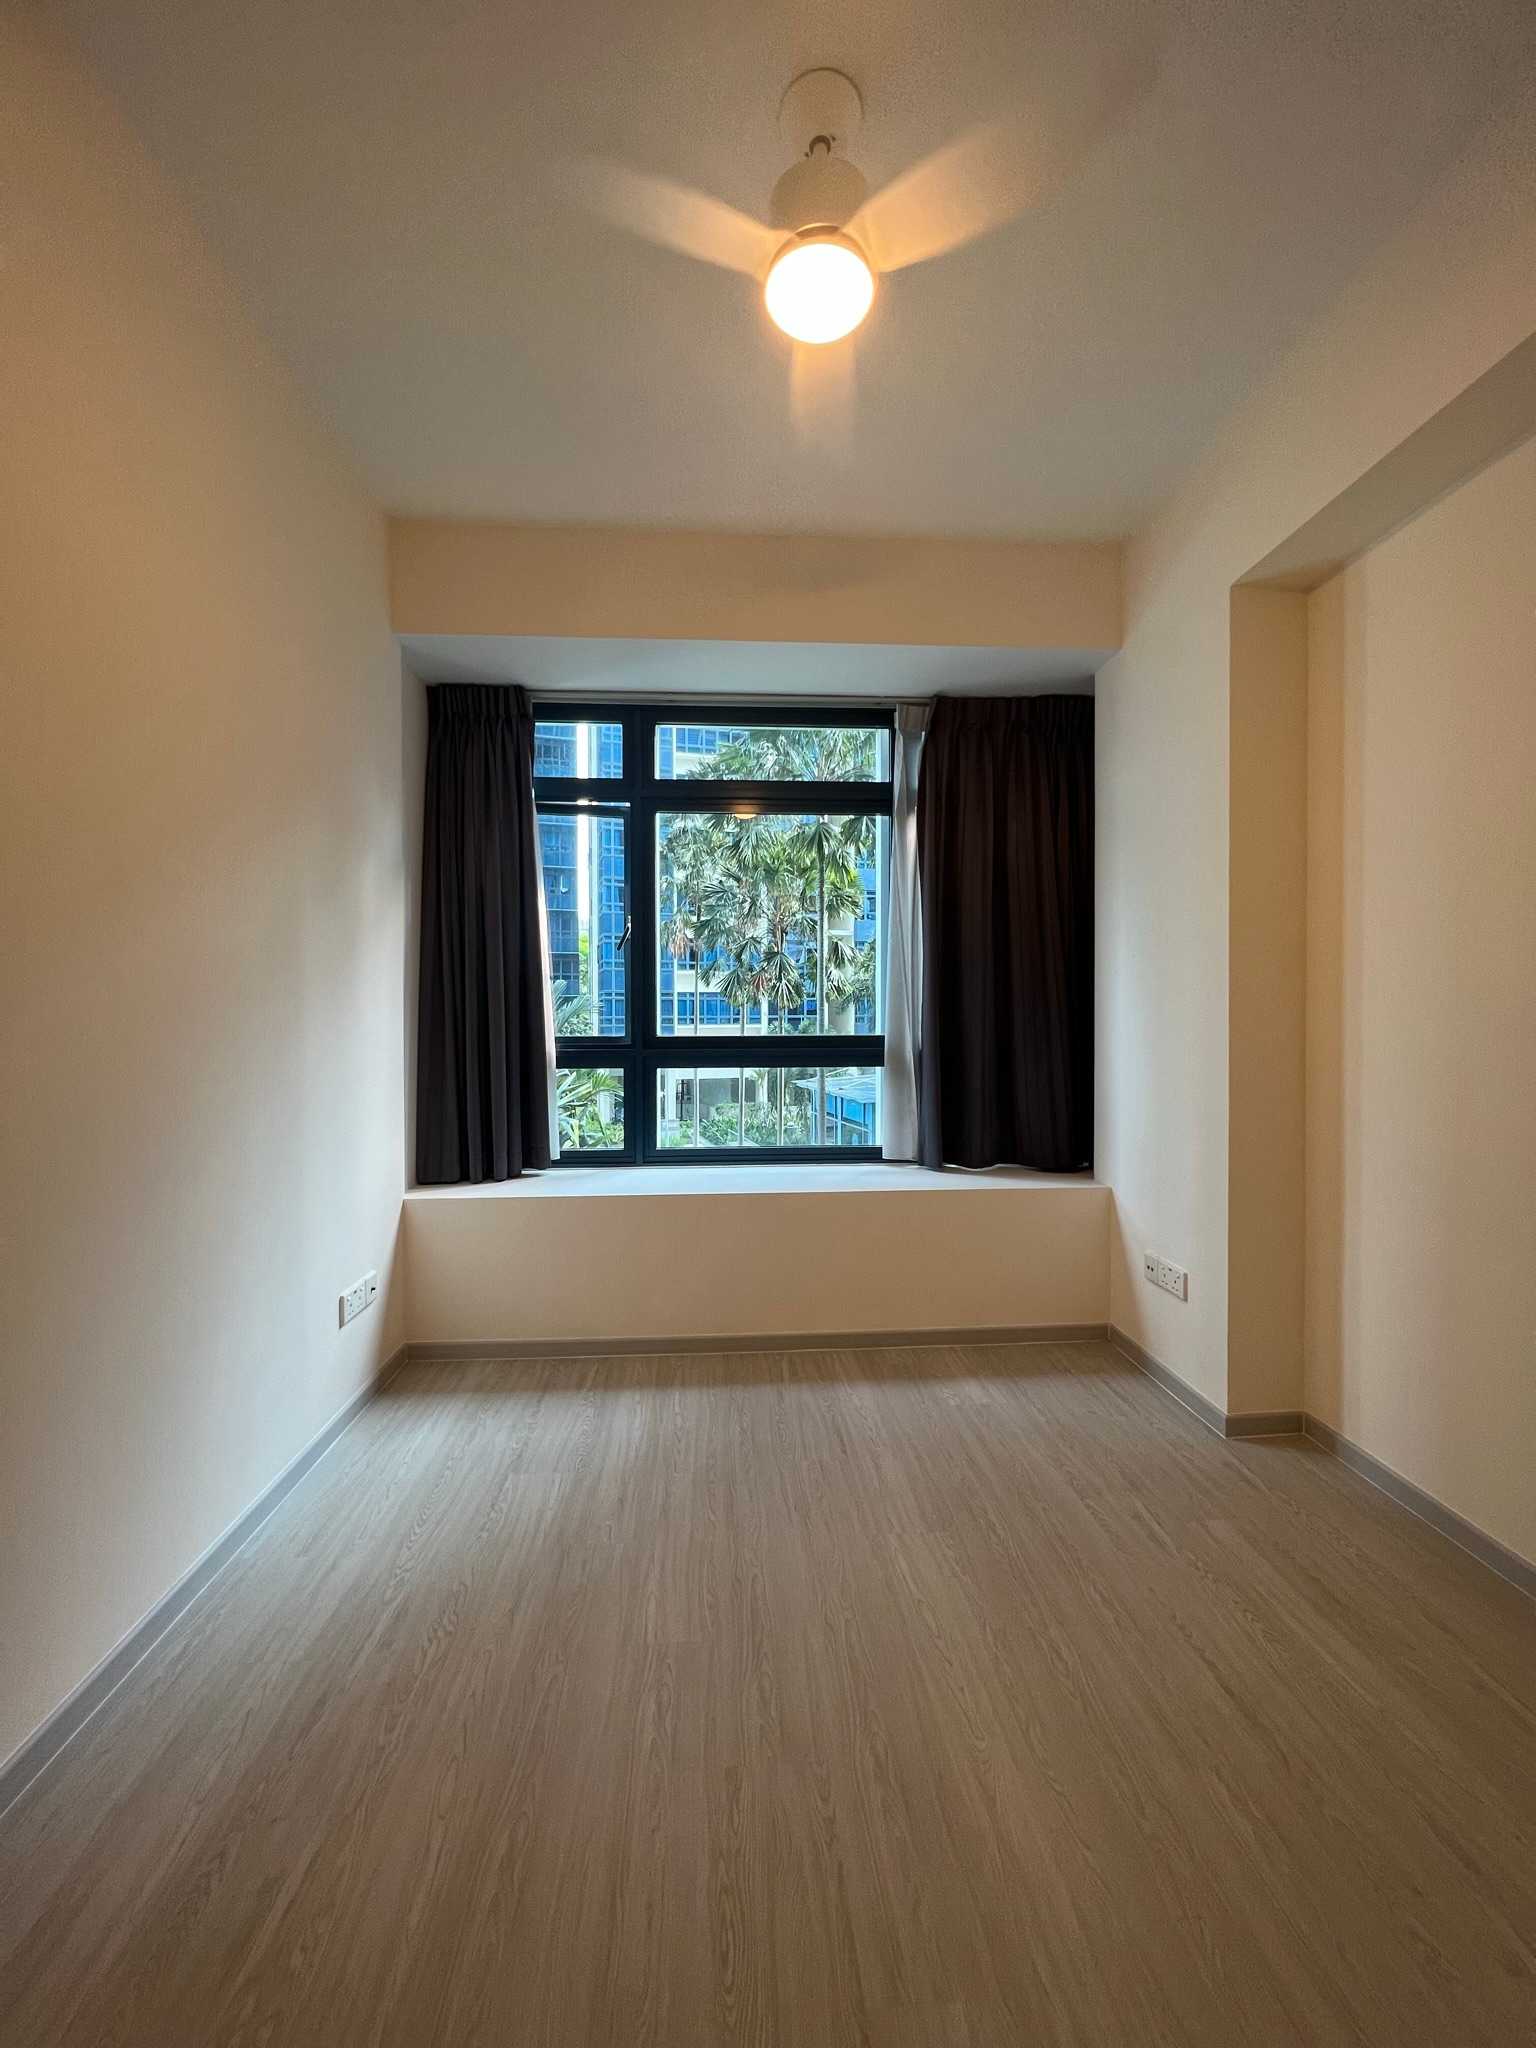 Condominium in Bright Hill Crescent, Central Singapore 11885947